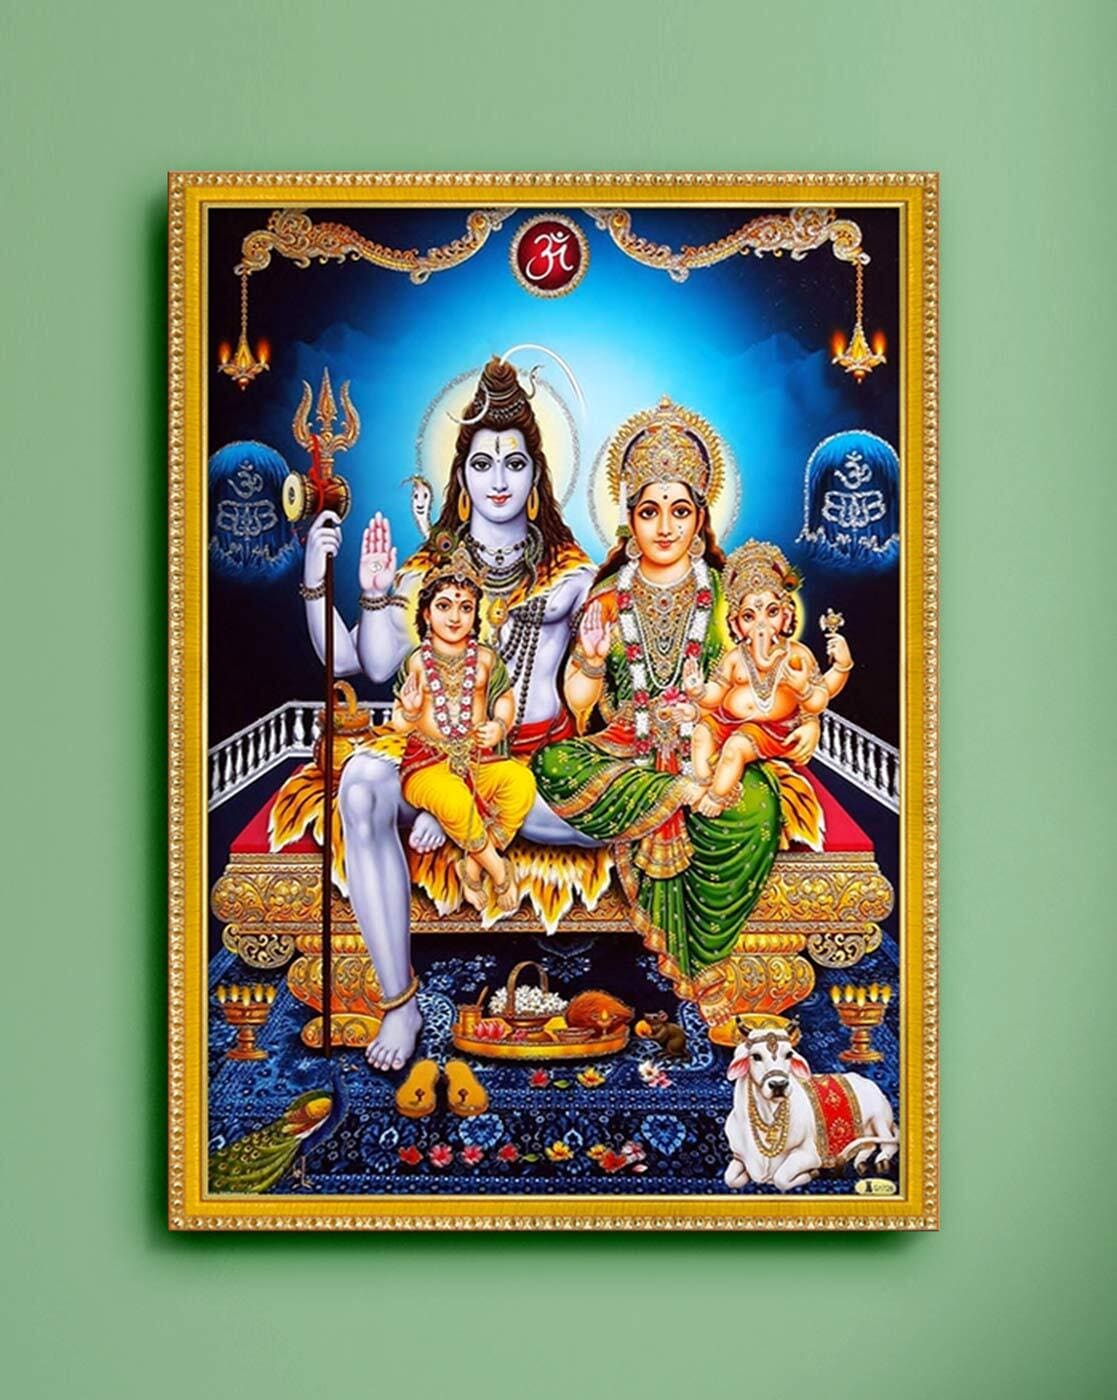 CHD Garphic Split Digital Wallpaper of Shiv Bhagwan in Multiple pcs  (Multicolour) : Amazon.in: Home & Kitchen